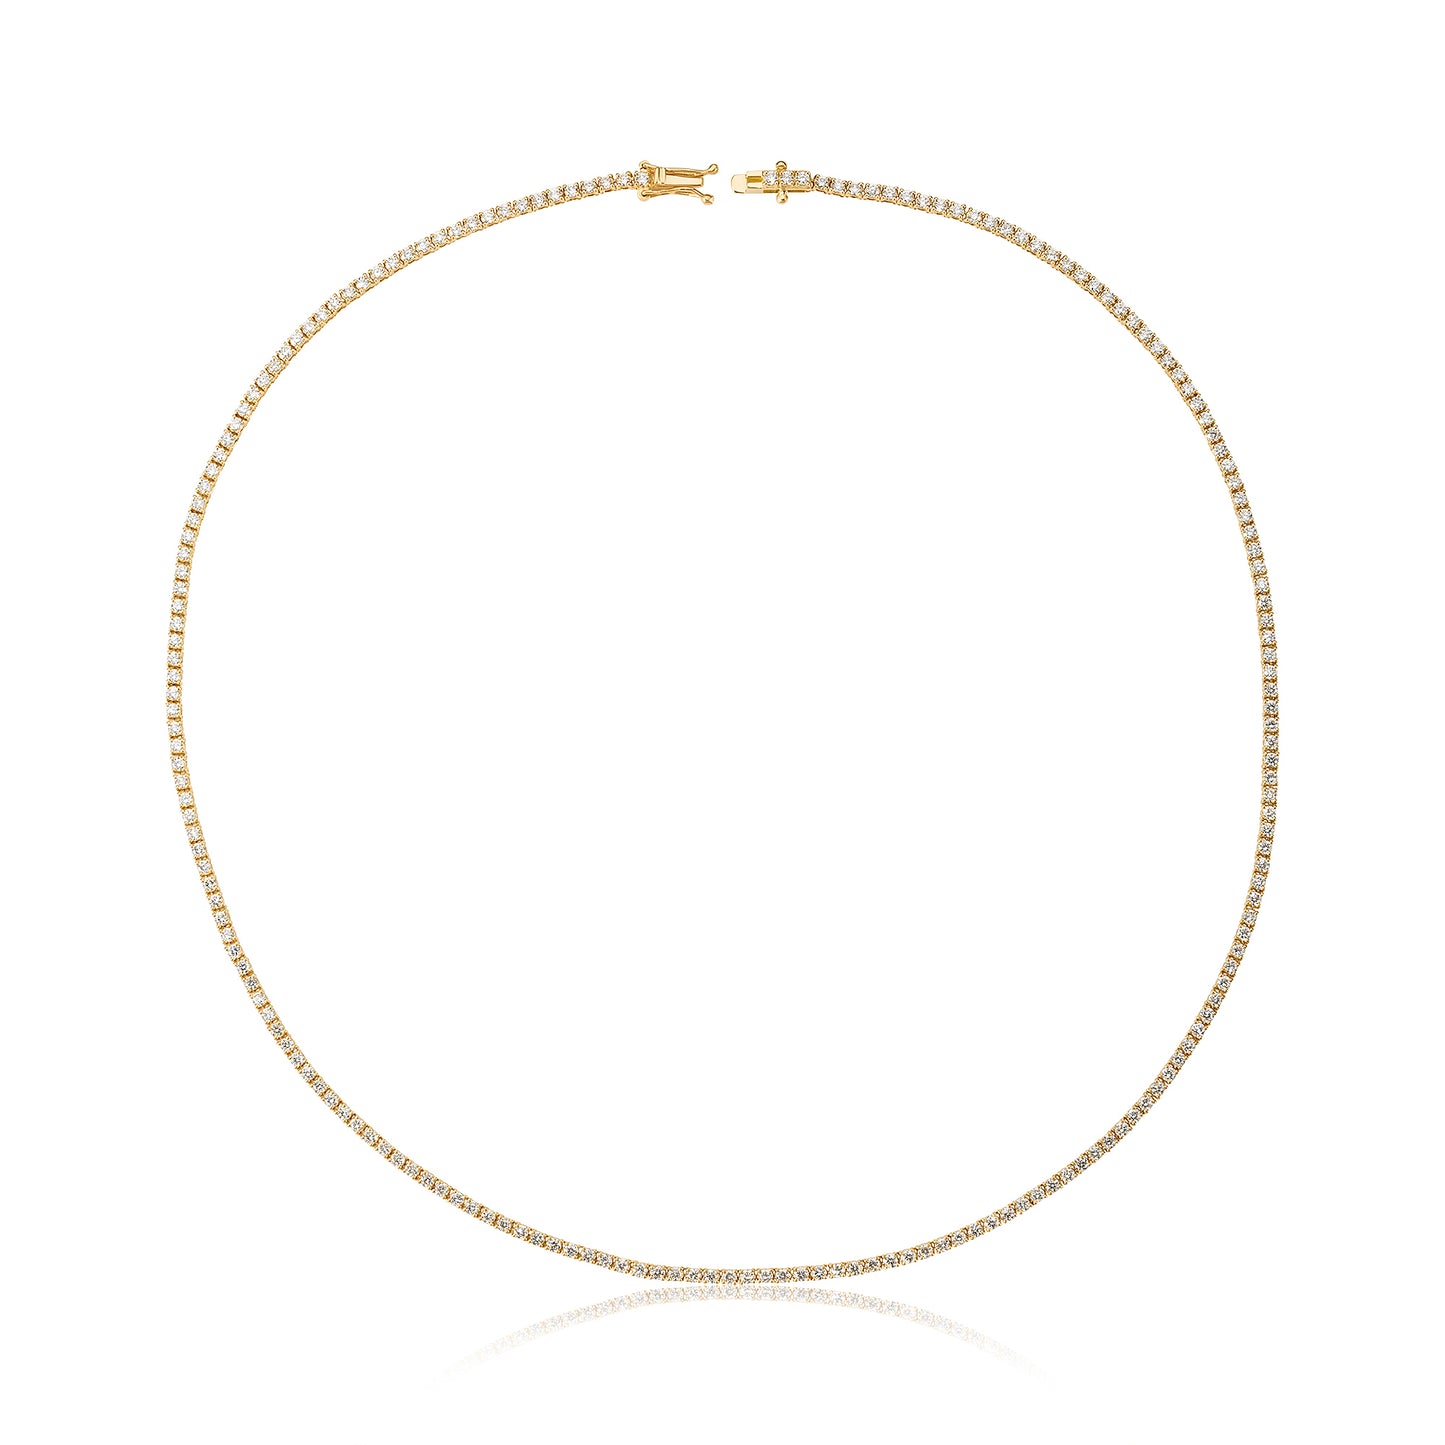 4.73ct Diamond Tennis Necklace